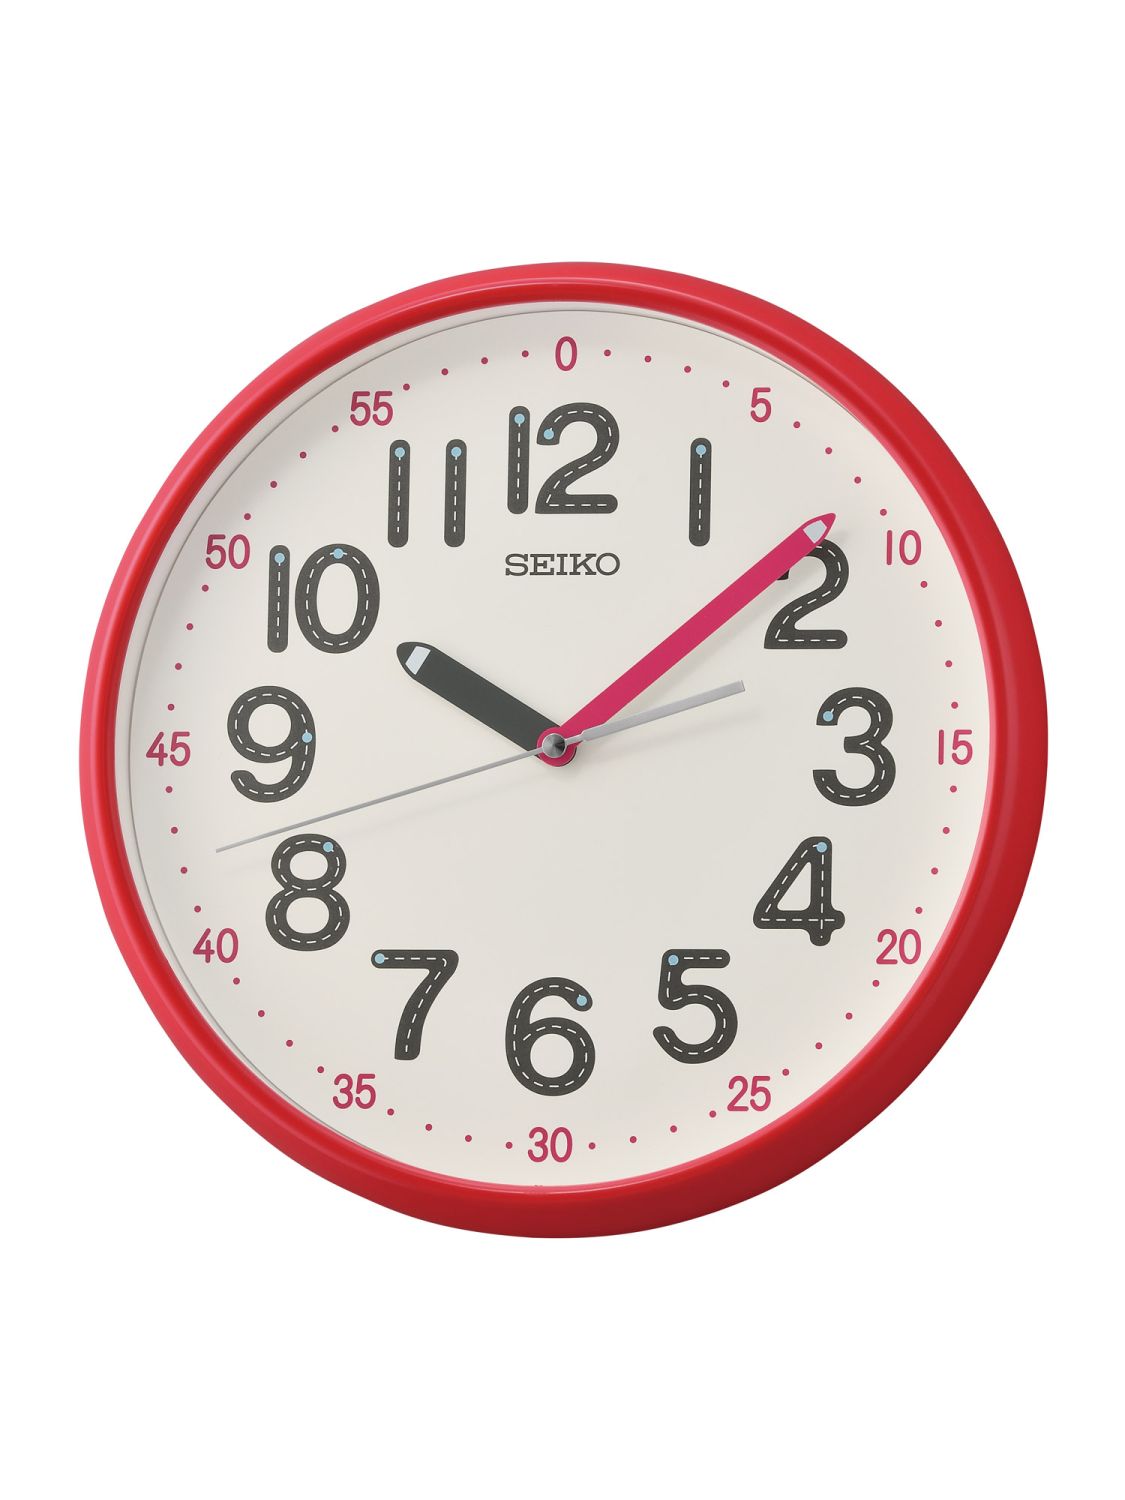 SEIKO QXA793R Wall Clock Quartz Red • uhrcenter Clocks Shop